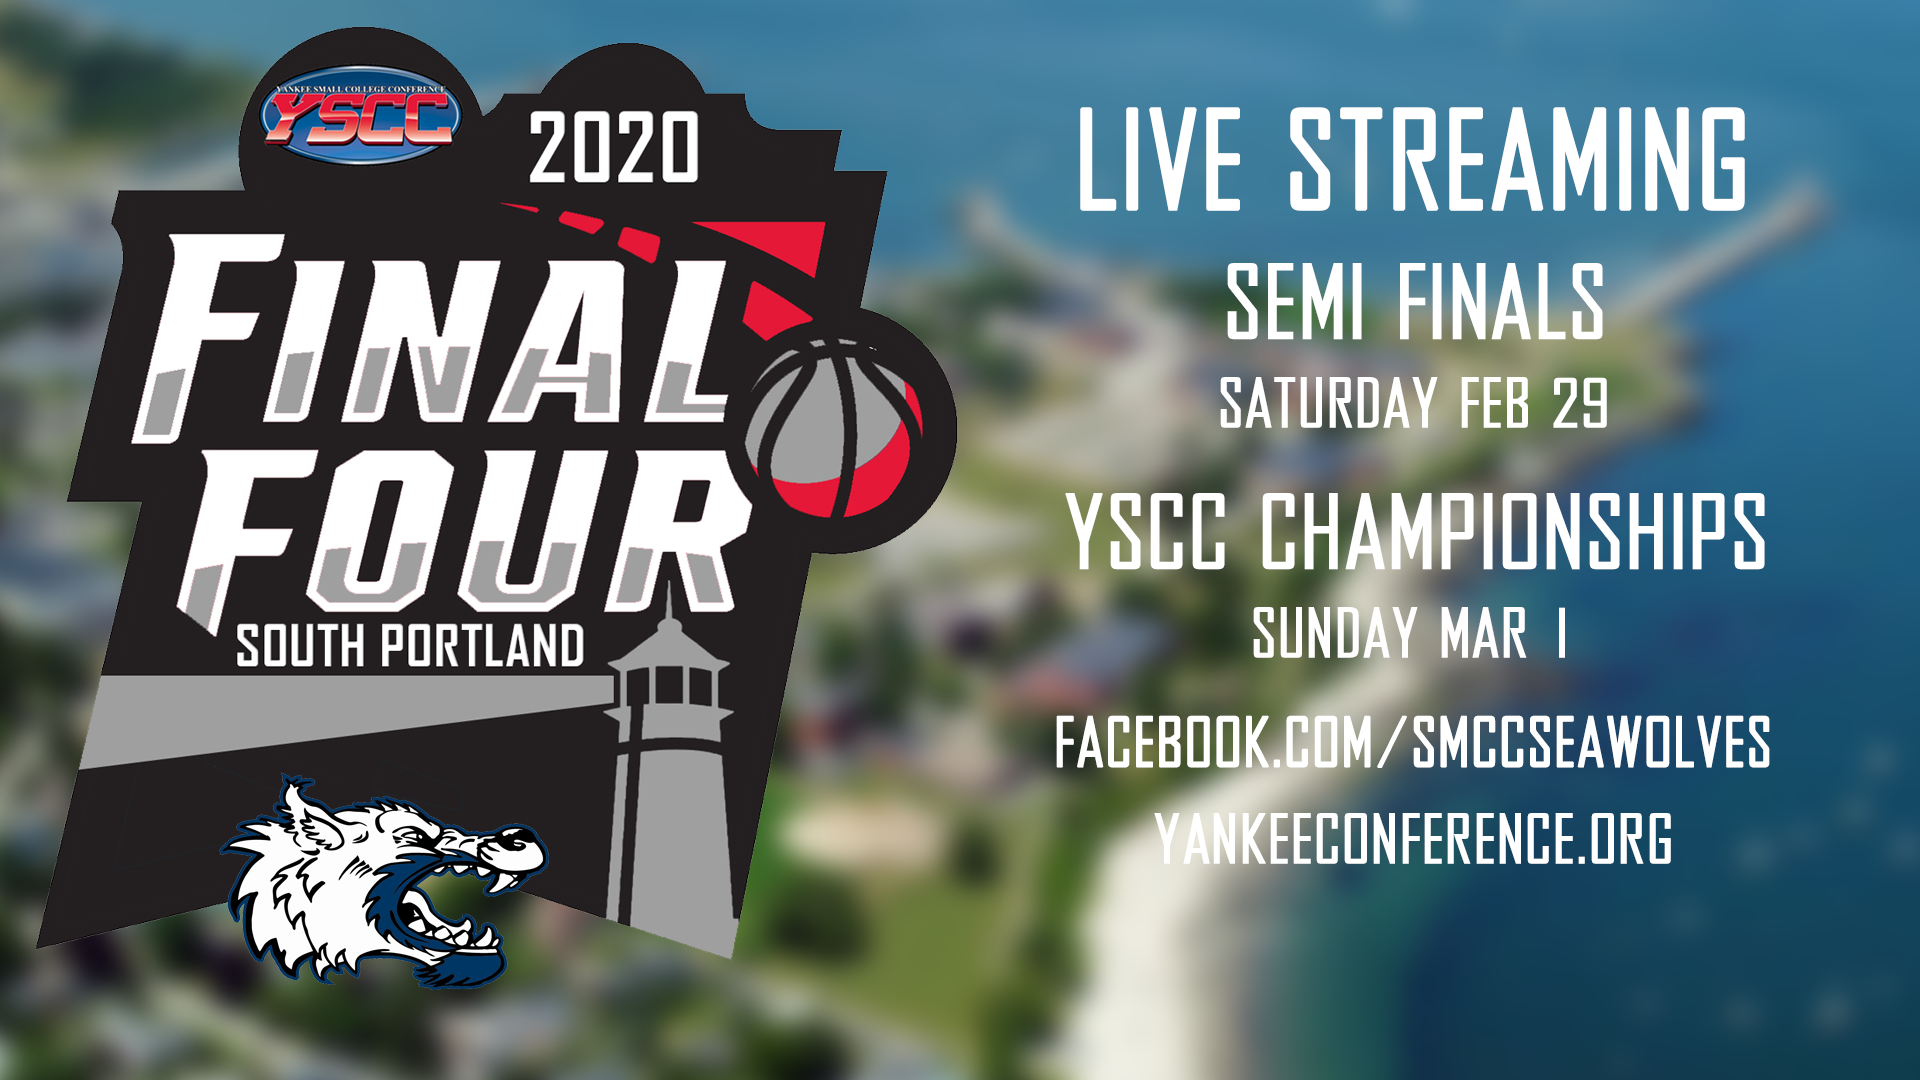 YSCC Basketball Championship Sunday set